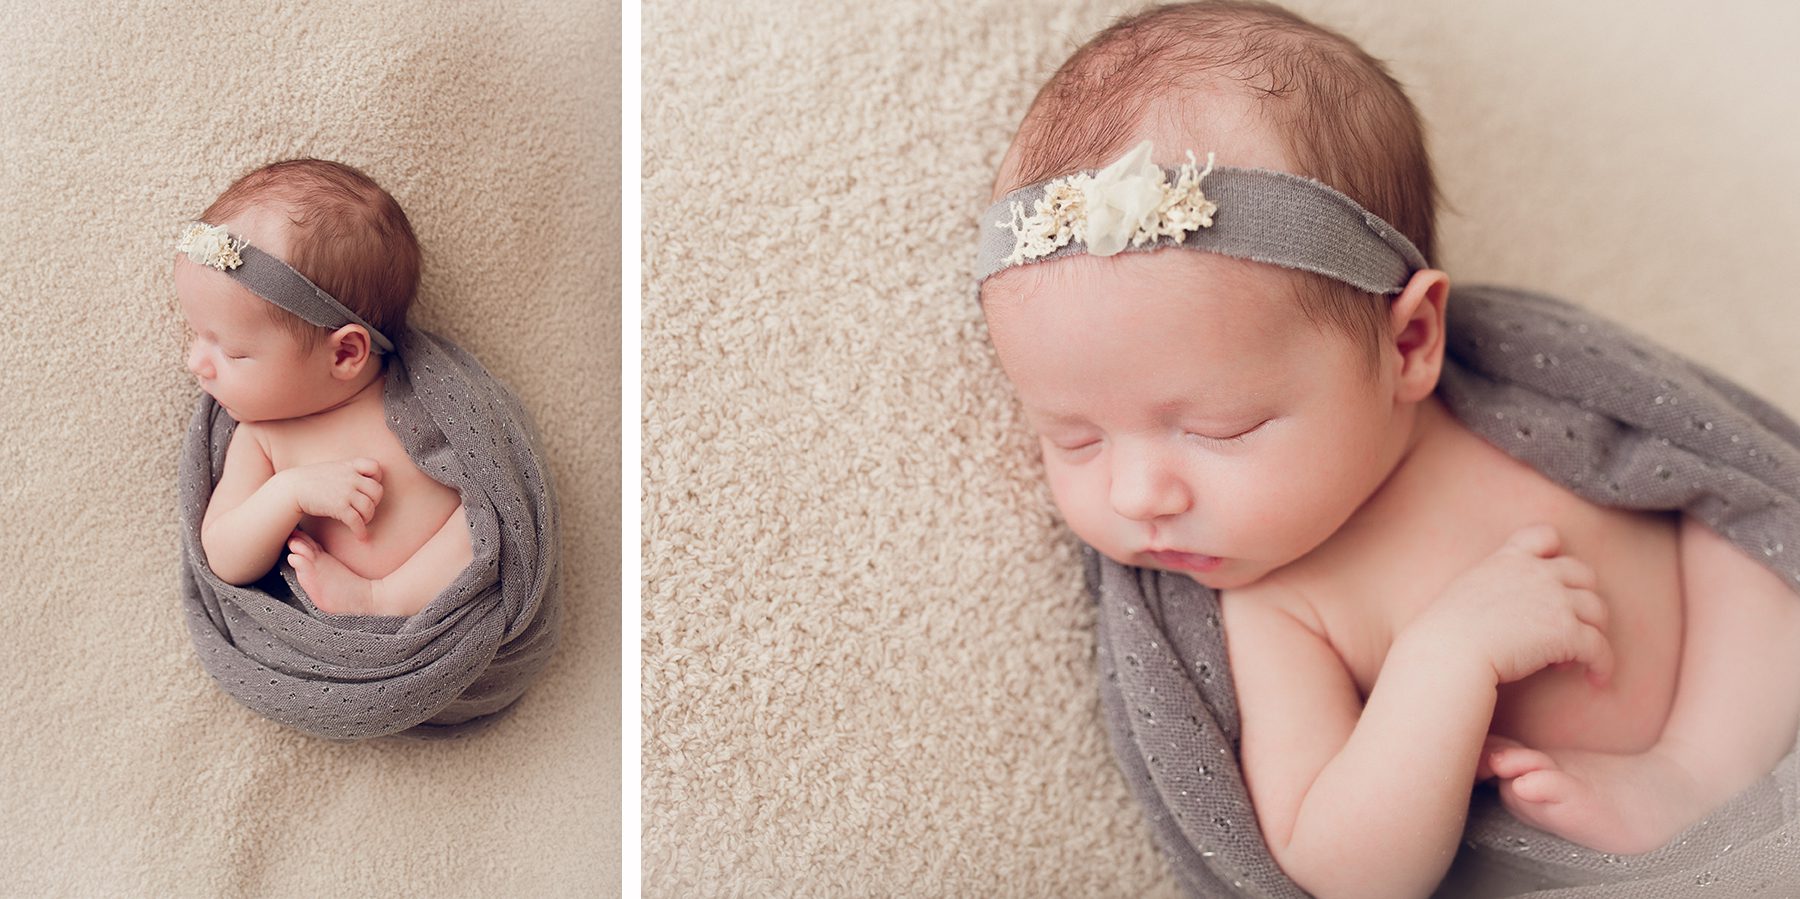 edmonton newborn photographer - newborn wrapped in grey wrap